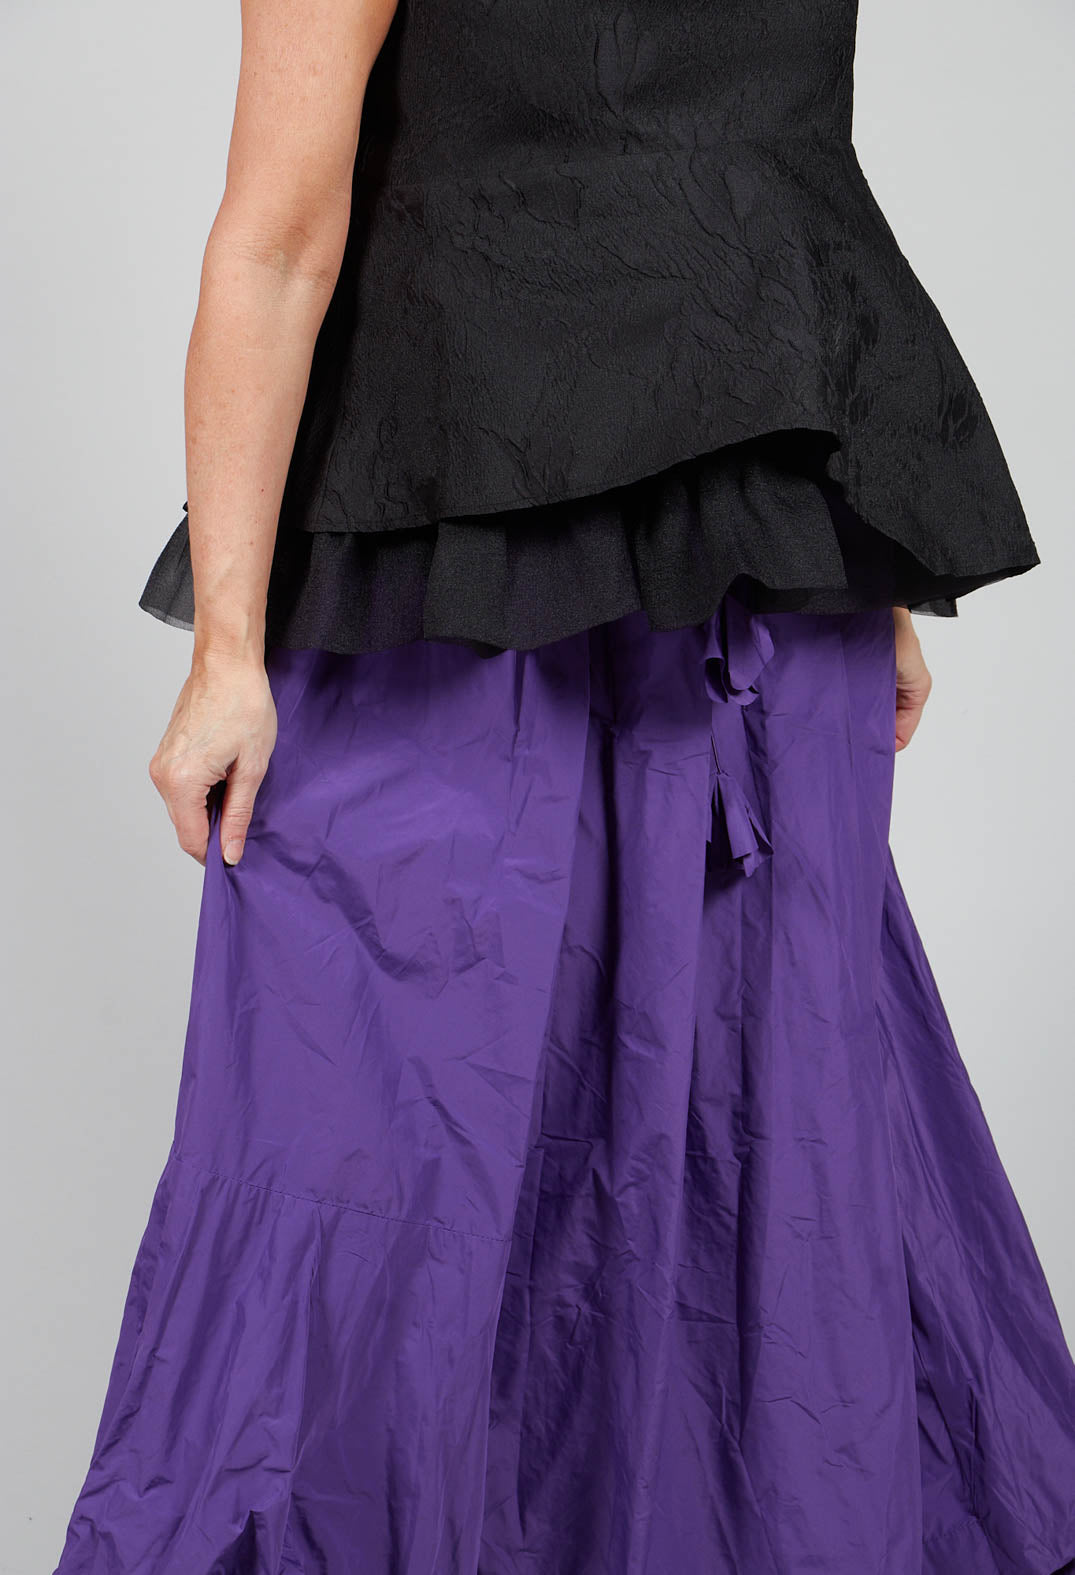 Dipped Hemline Skirt in Purple